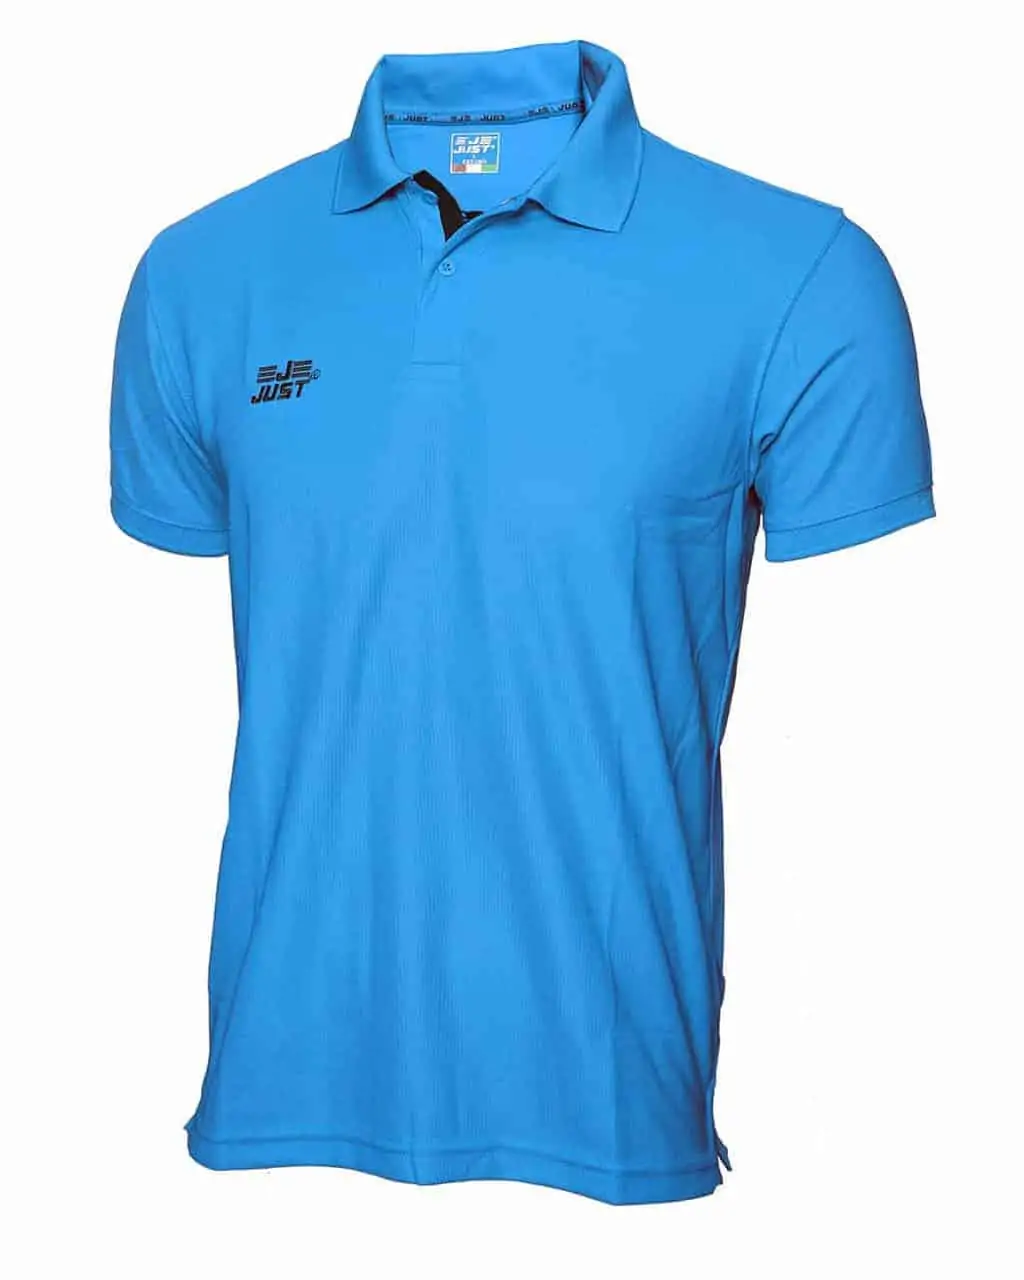 JUST SUPERSTAR Dry Fit Sports T-Shirt (I Blue) - Sports Goods Market